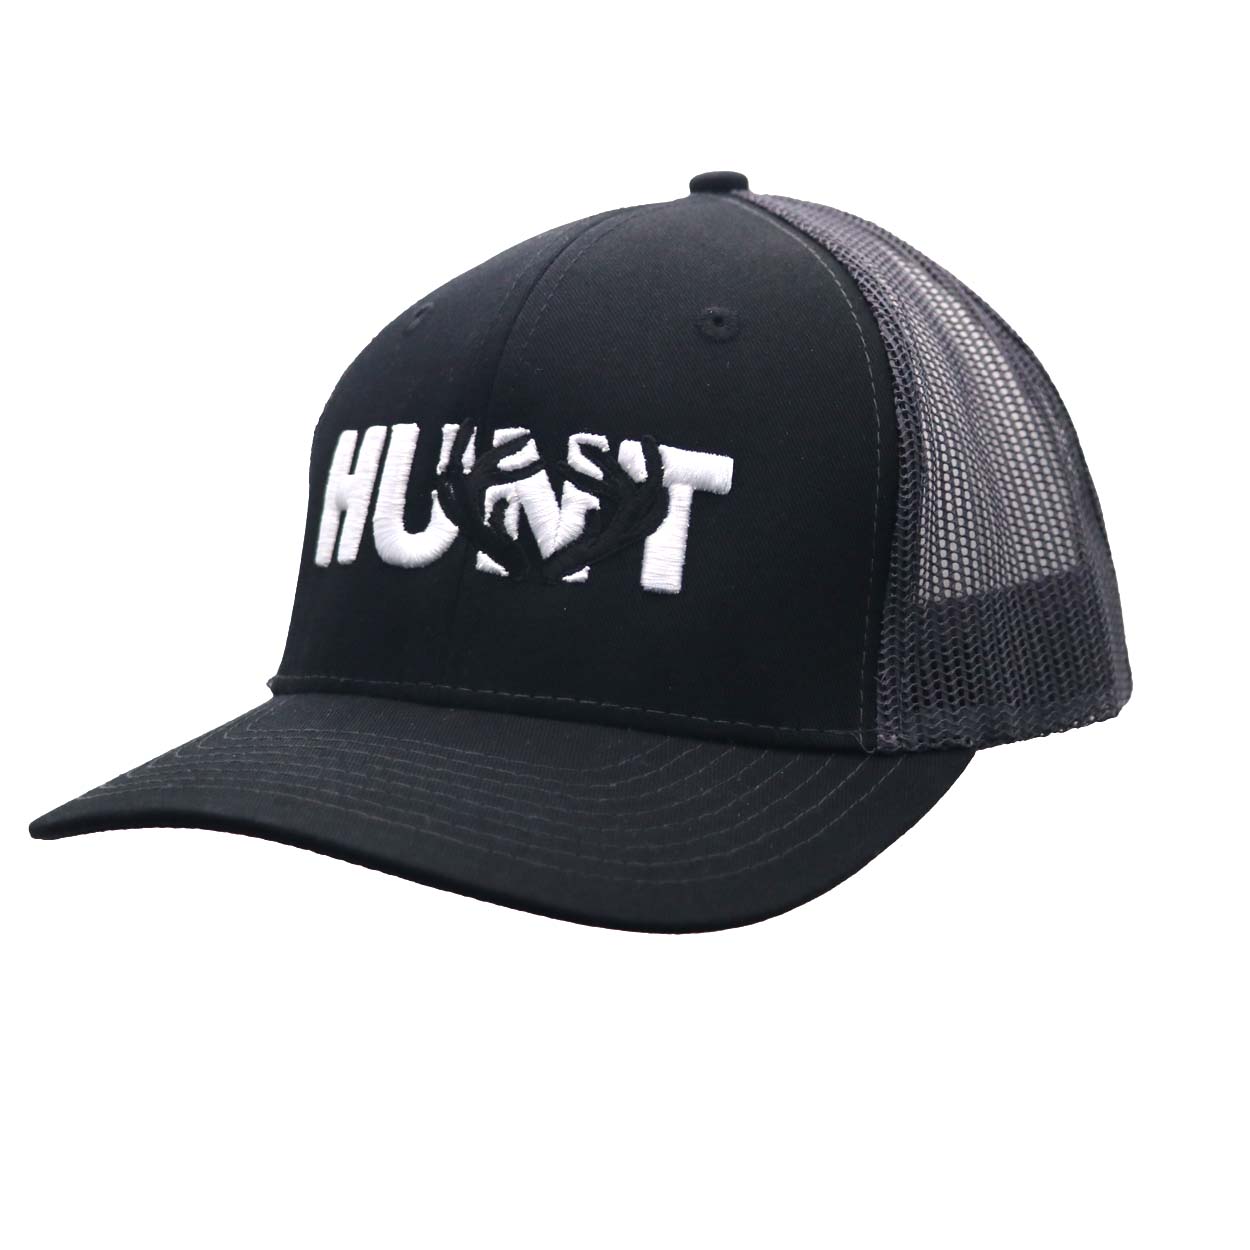 Hunt Rack Logo Classic Embroidered Snapback Trucker Hat Black/Charcoal